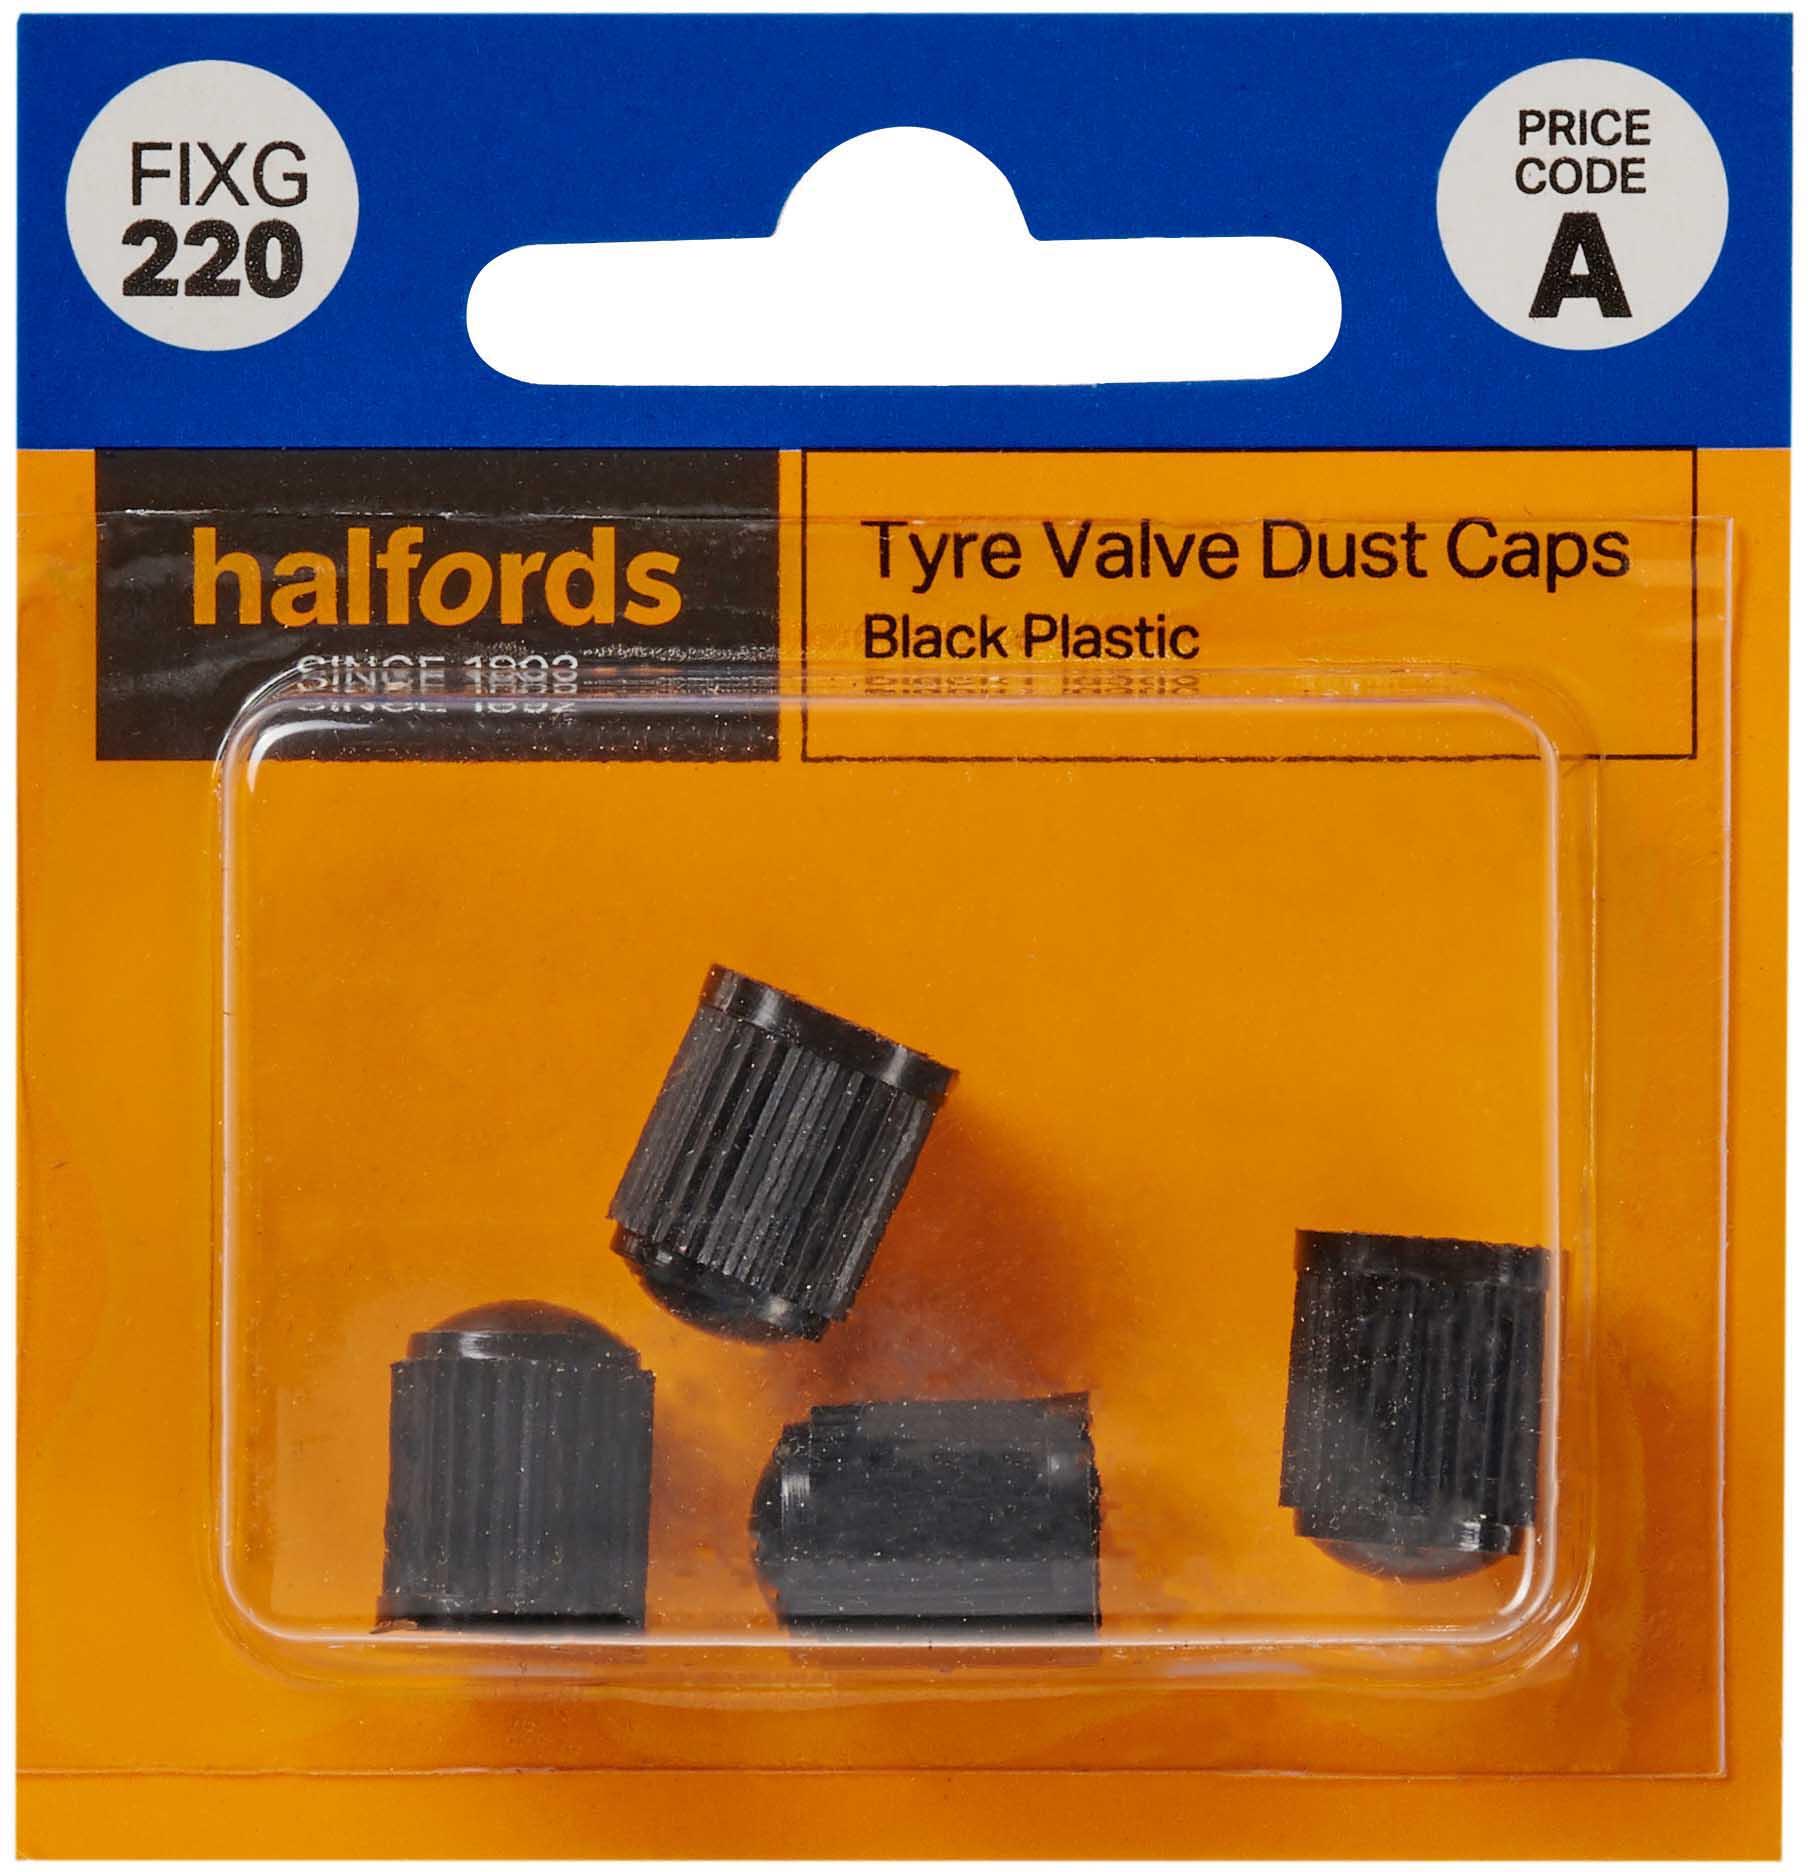 Halfords Tyre Valve Dust Caps Black (FIXG220) Halfords UK